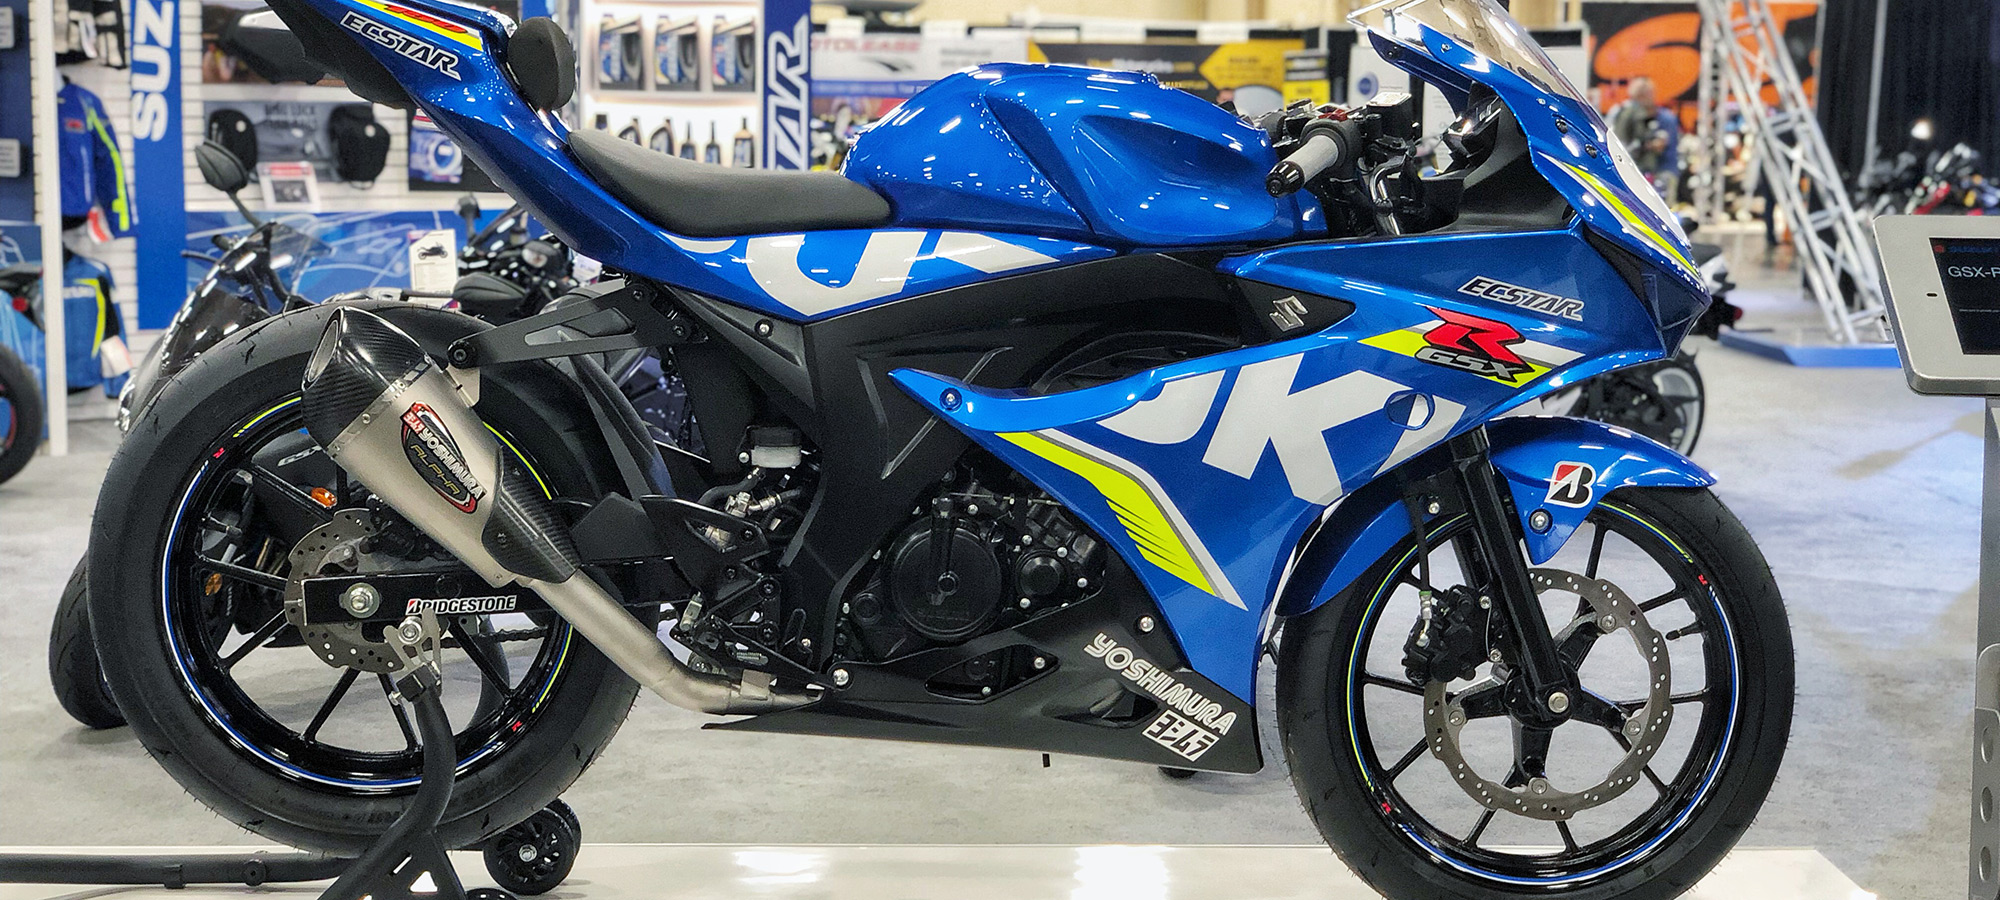 Suzuki GSX-R150 And GSX-R150 Roadrace Concept First Look | Motorcyclist